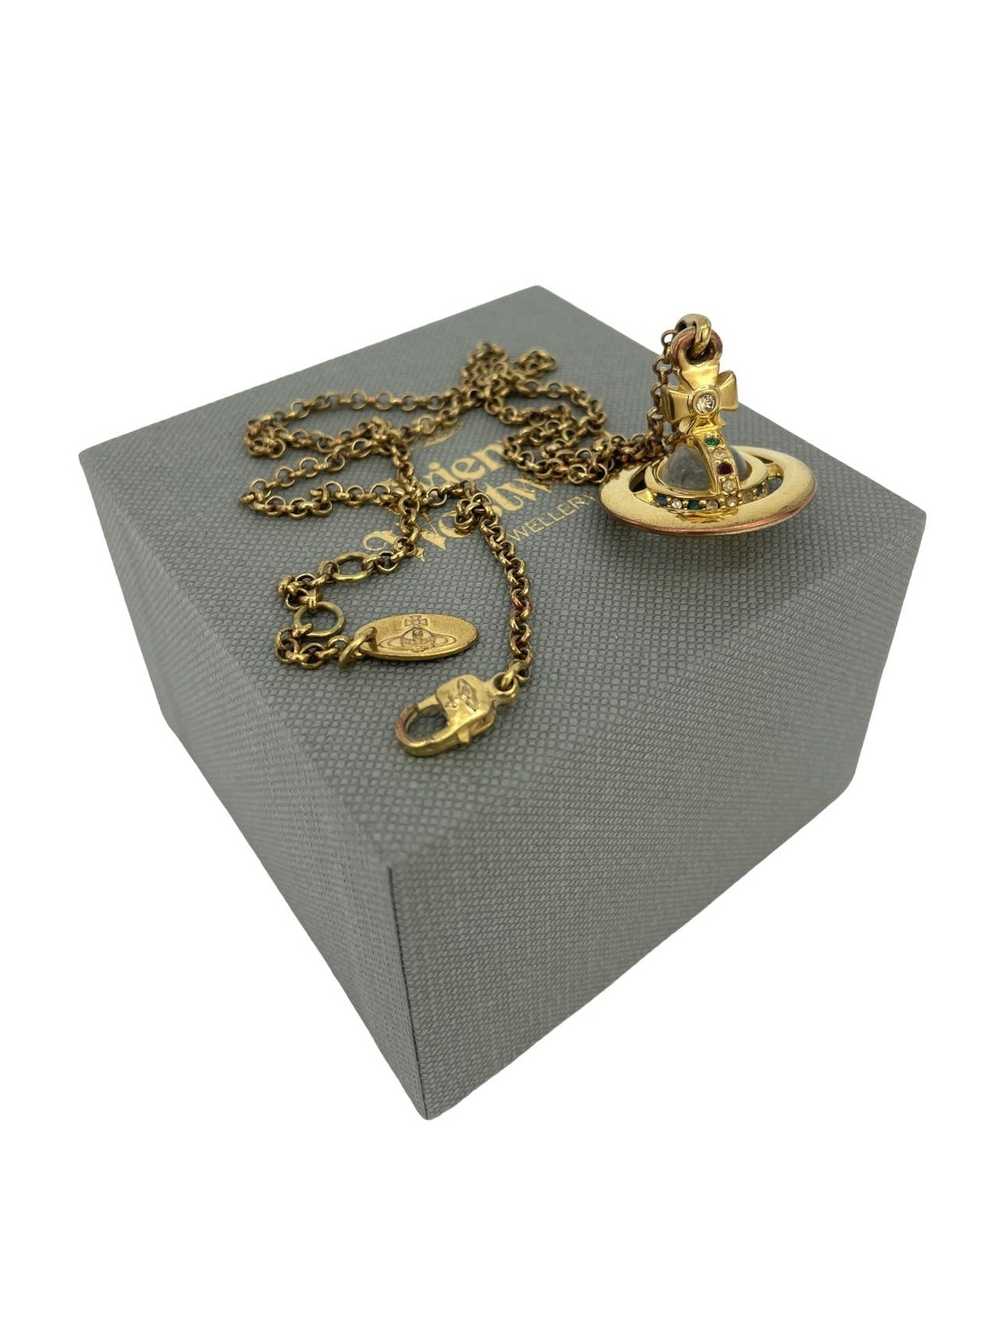 Vivienne Westwood Gold 3D Orb Necklace - image 2